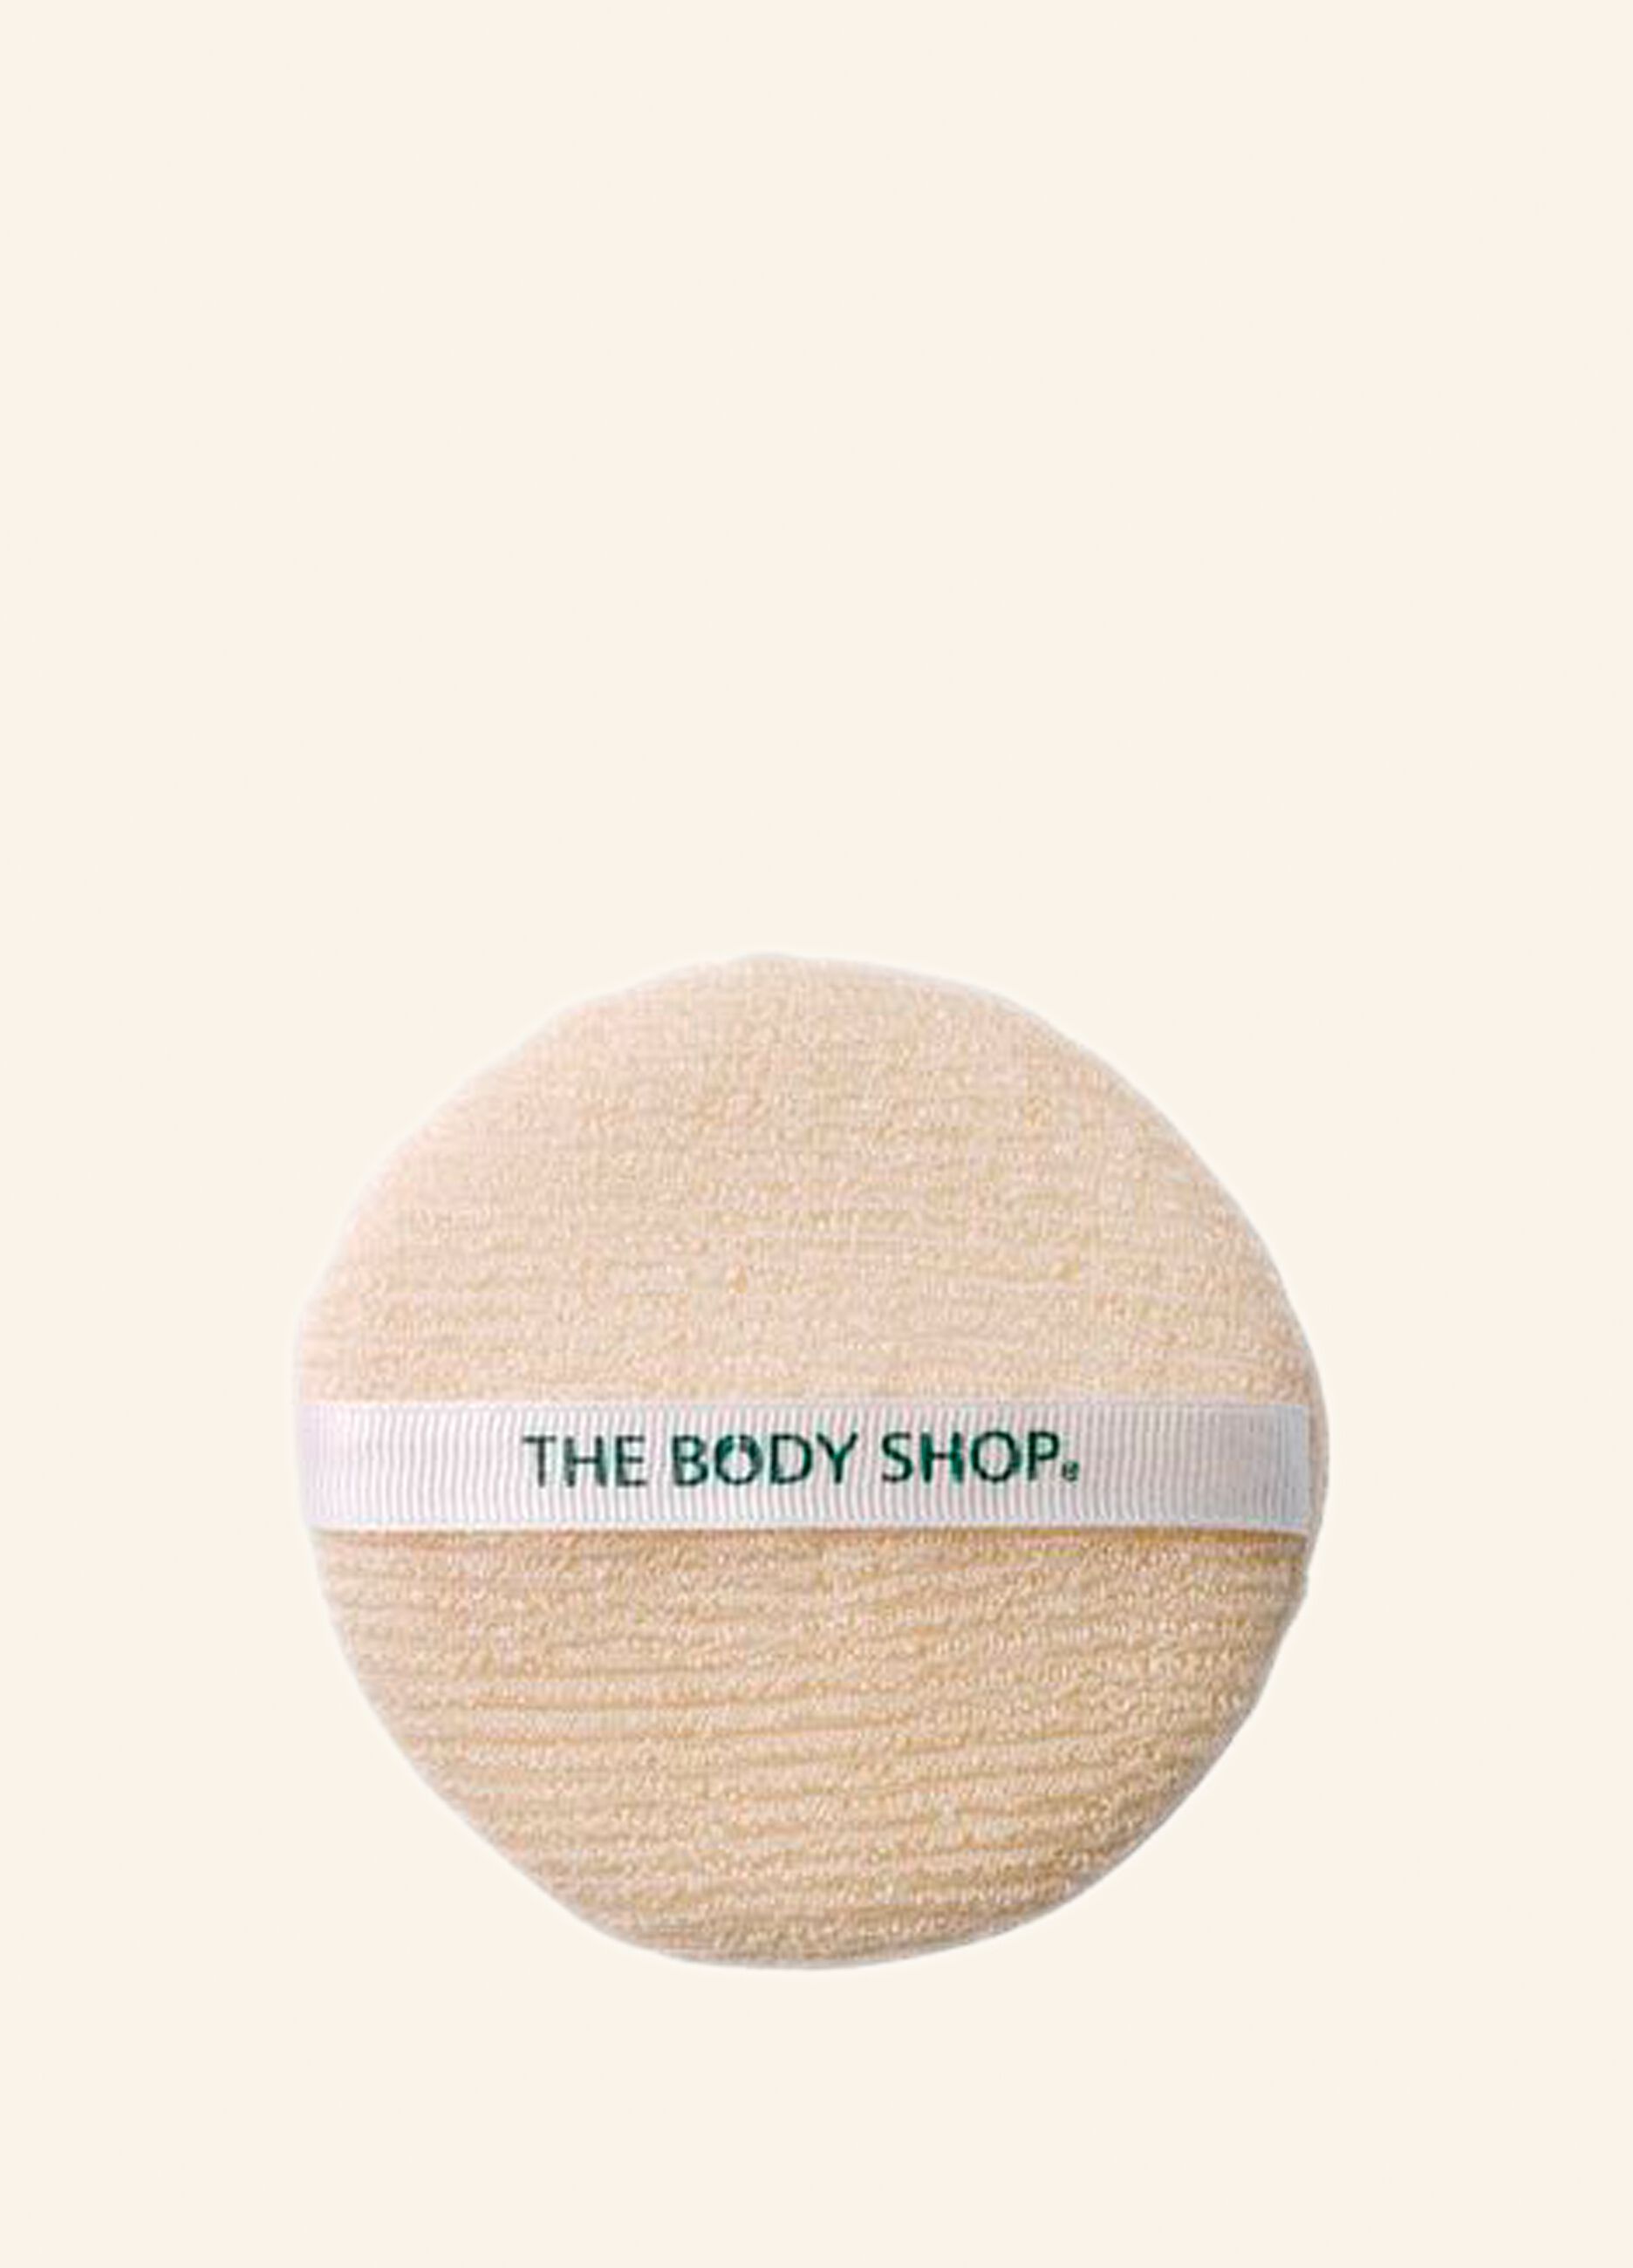 The Body Shop exfoliating facial pad